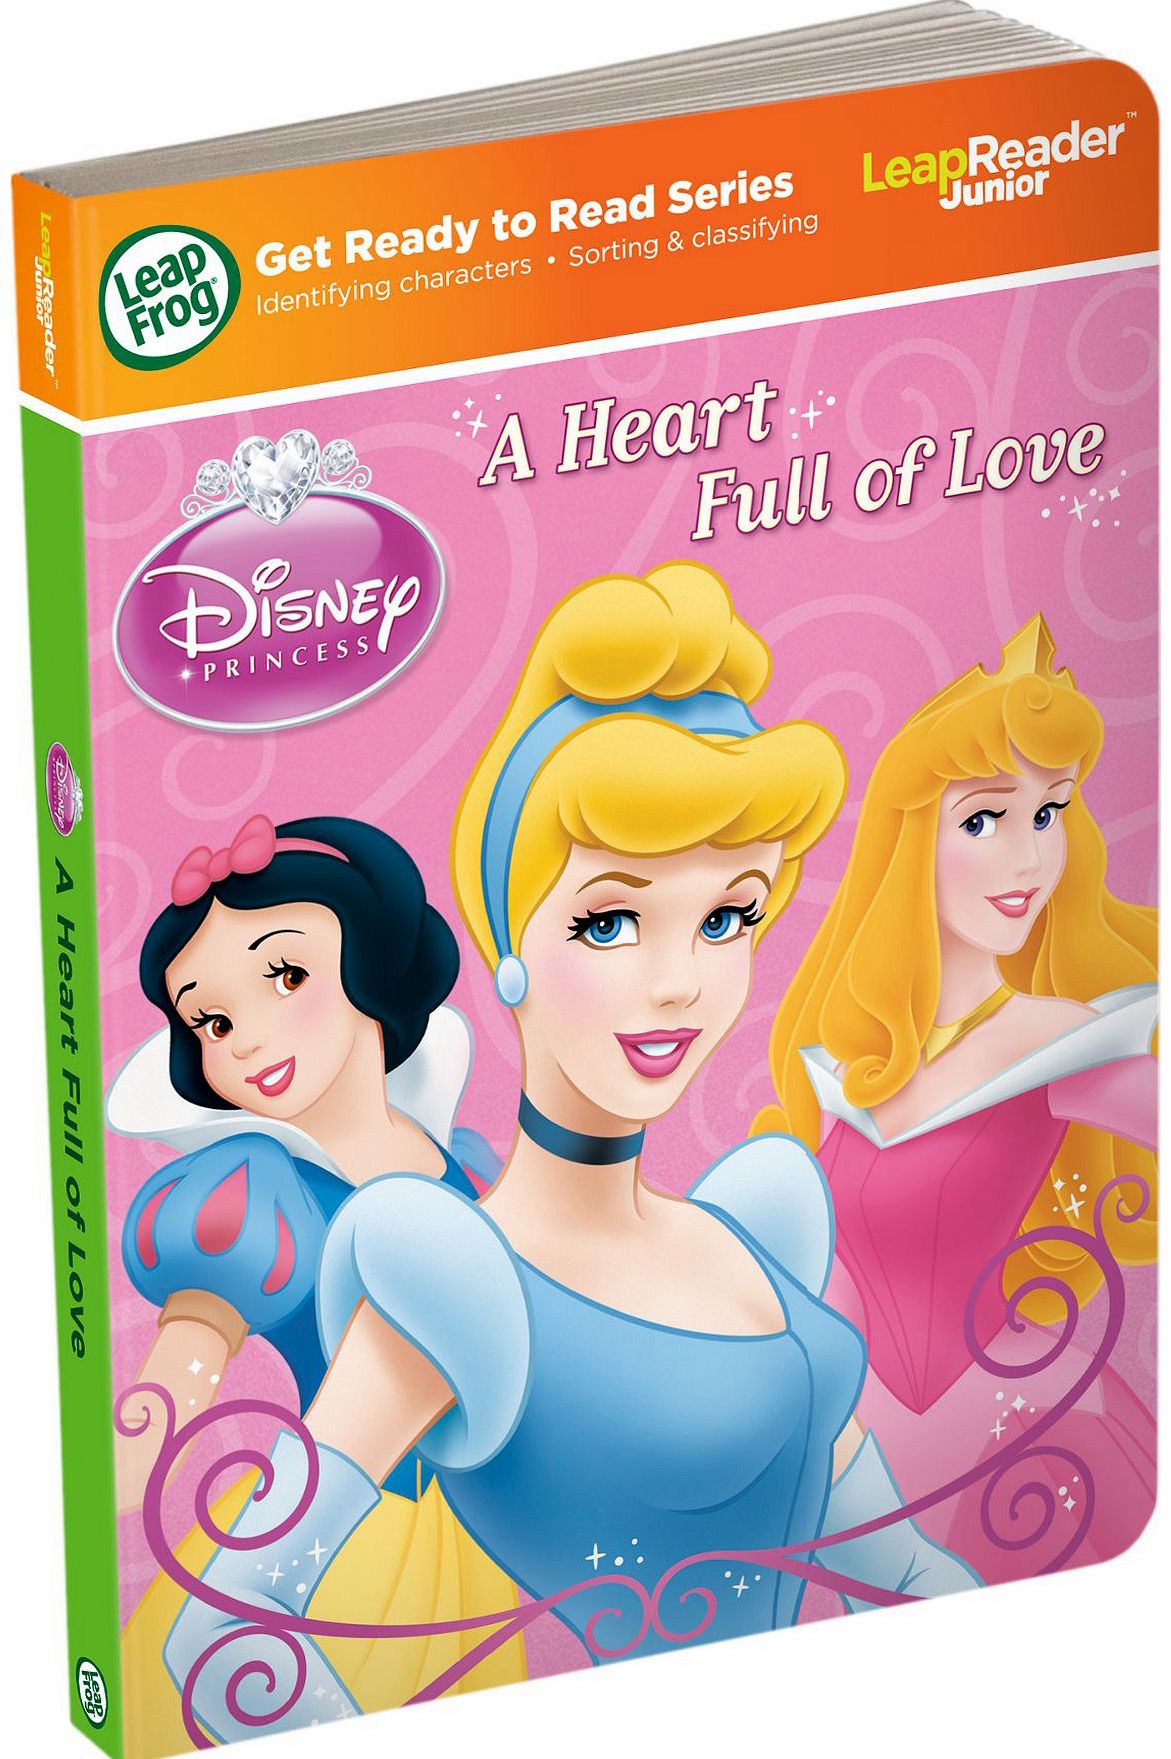 Tag Book Disney Princess A Heart Full